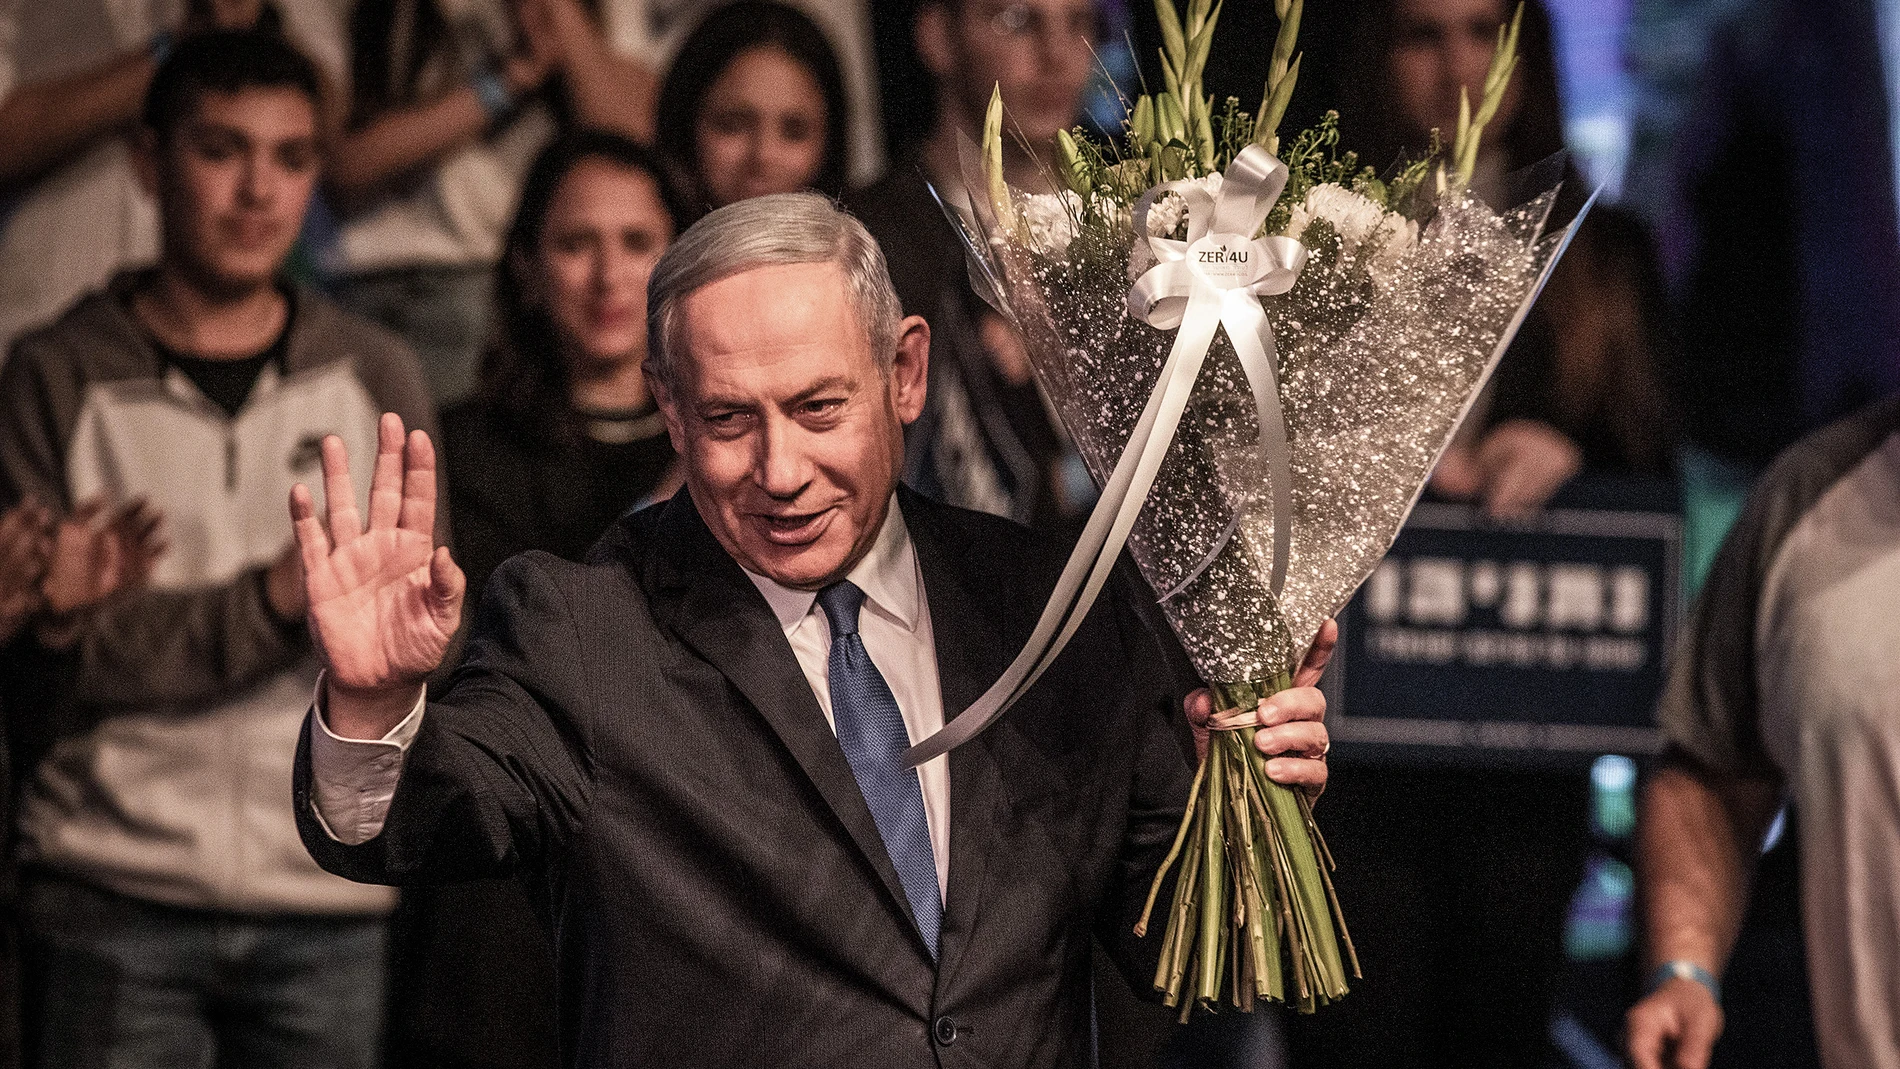 Election campaigns in Israel - Benjamin Netanyahu